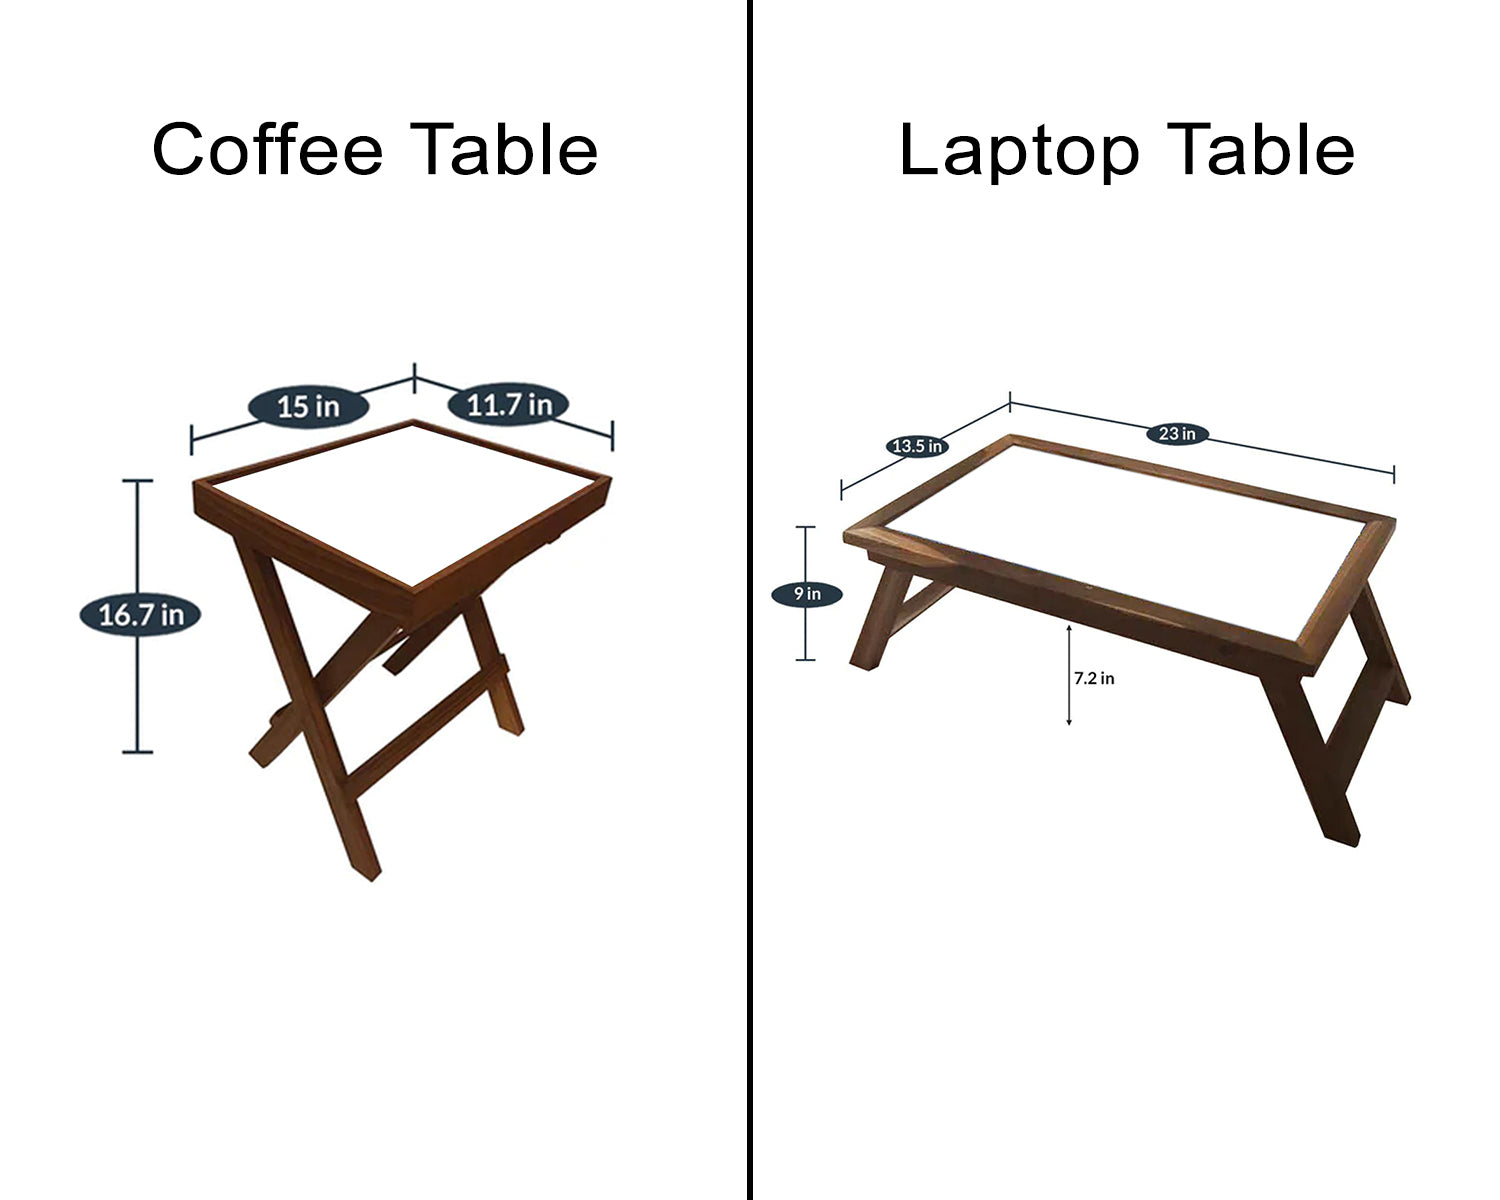 Brooks Koepka Splash Effect Coffee and Laptop Table 